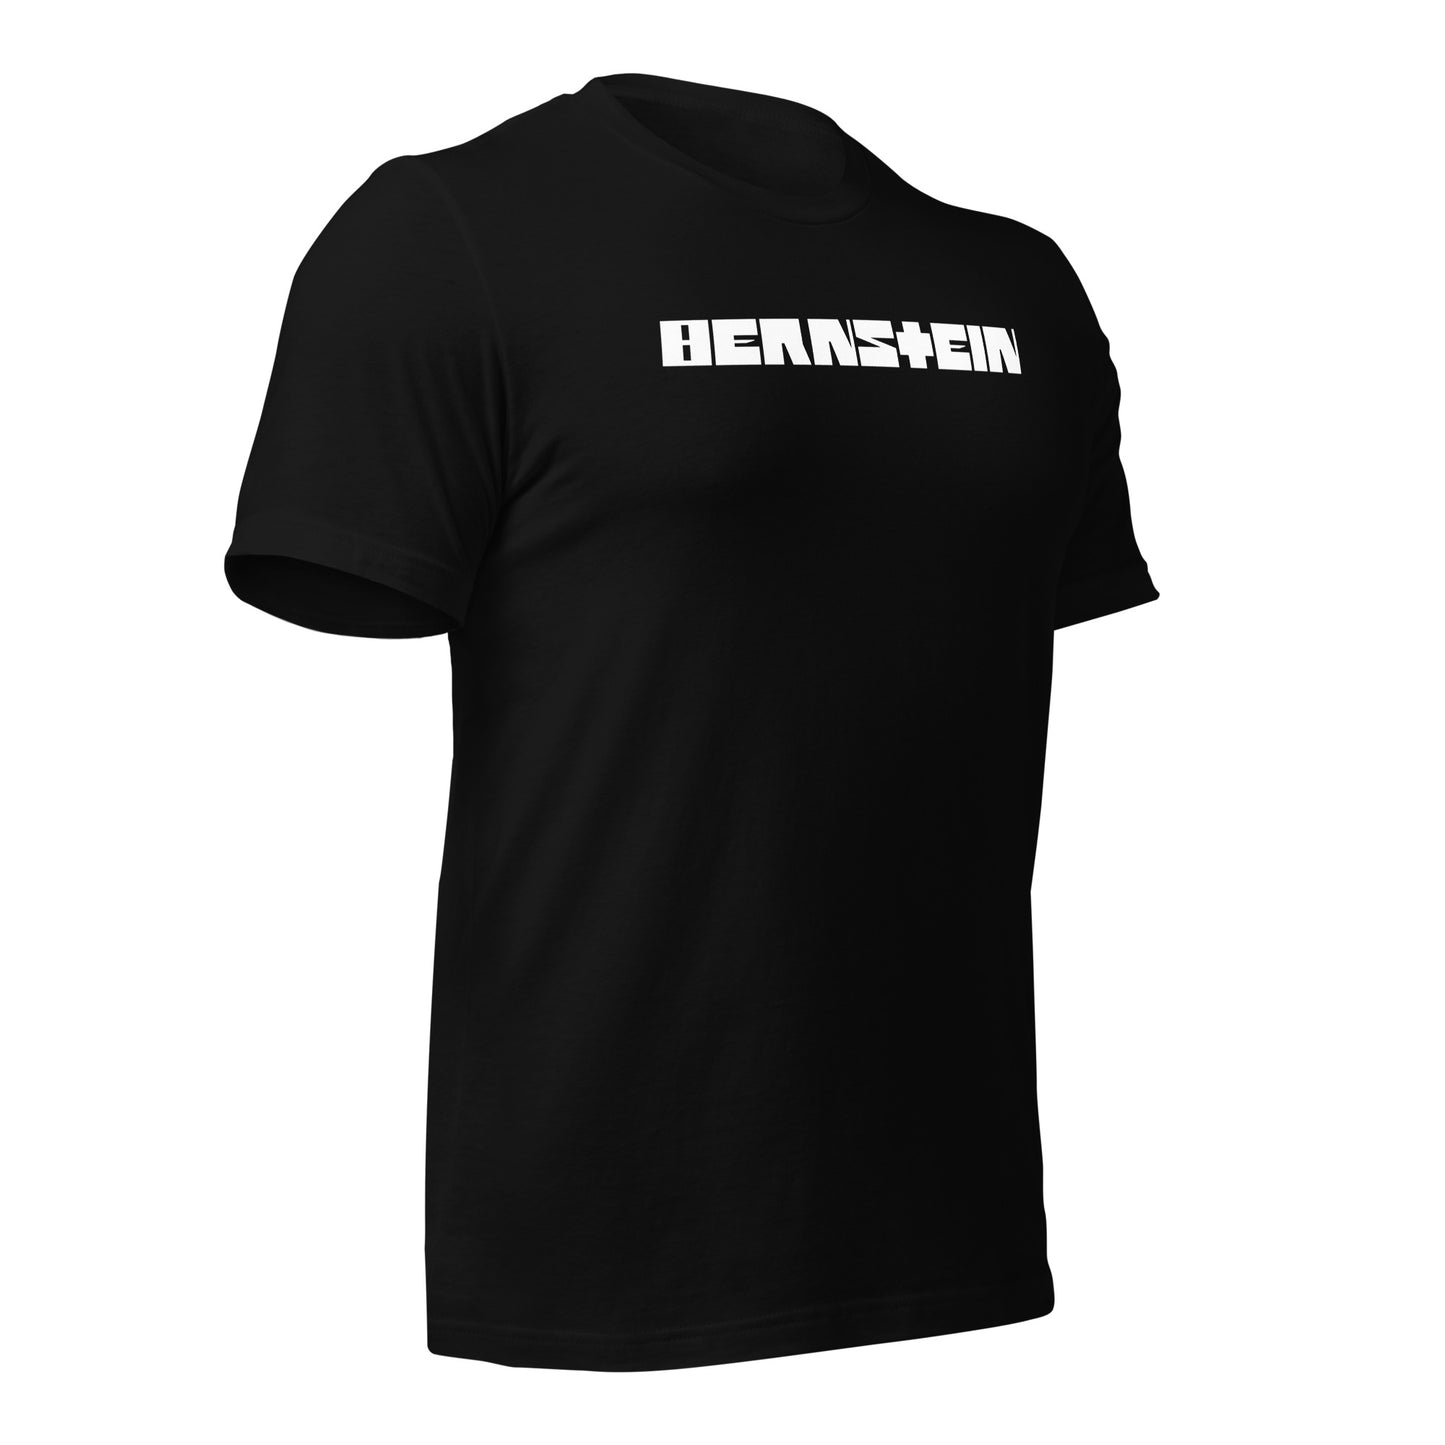 Leonard Bernstein - Band Tees Unisex t-shirt